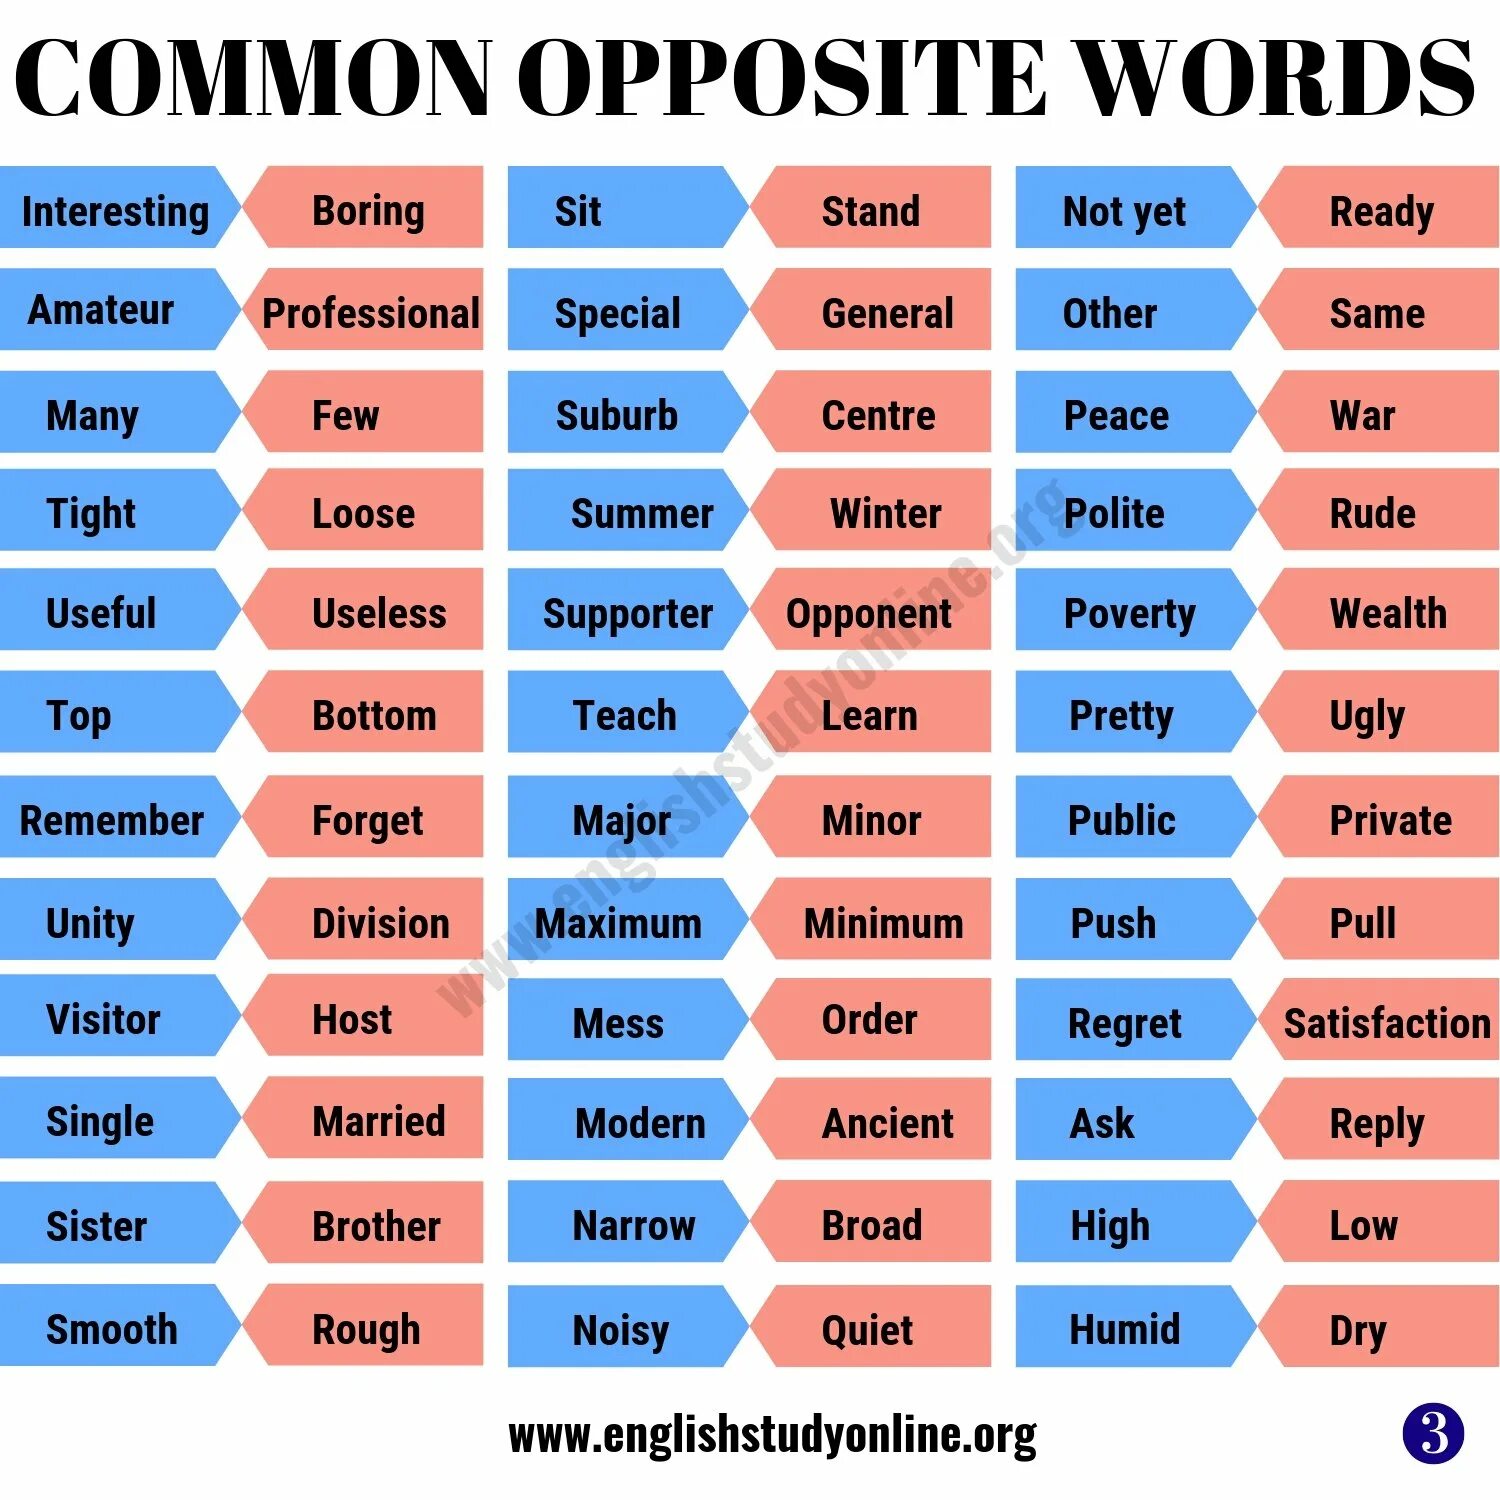 Opposite Words. Opposite Words in English. Serious opposite Word. Opposite of helpful. Opposite of each